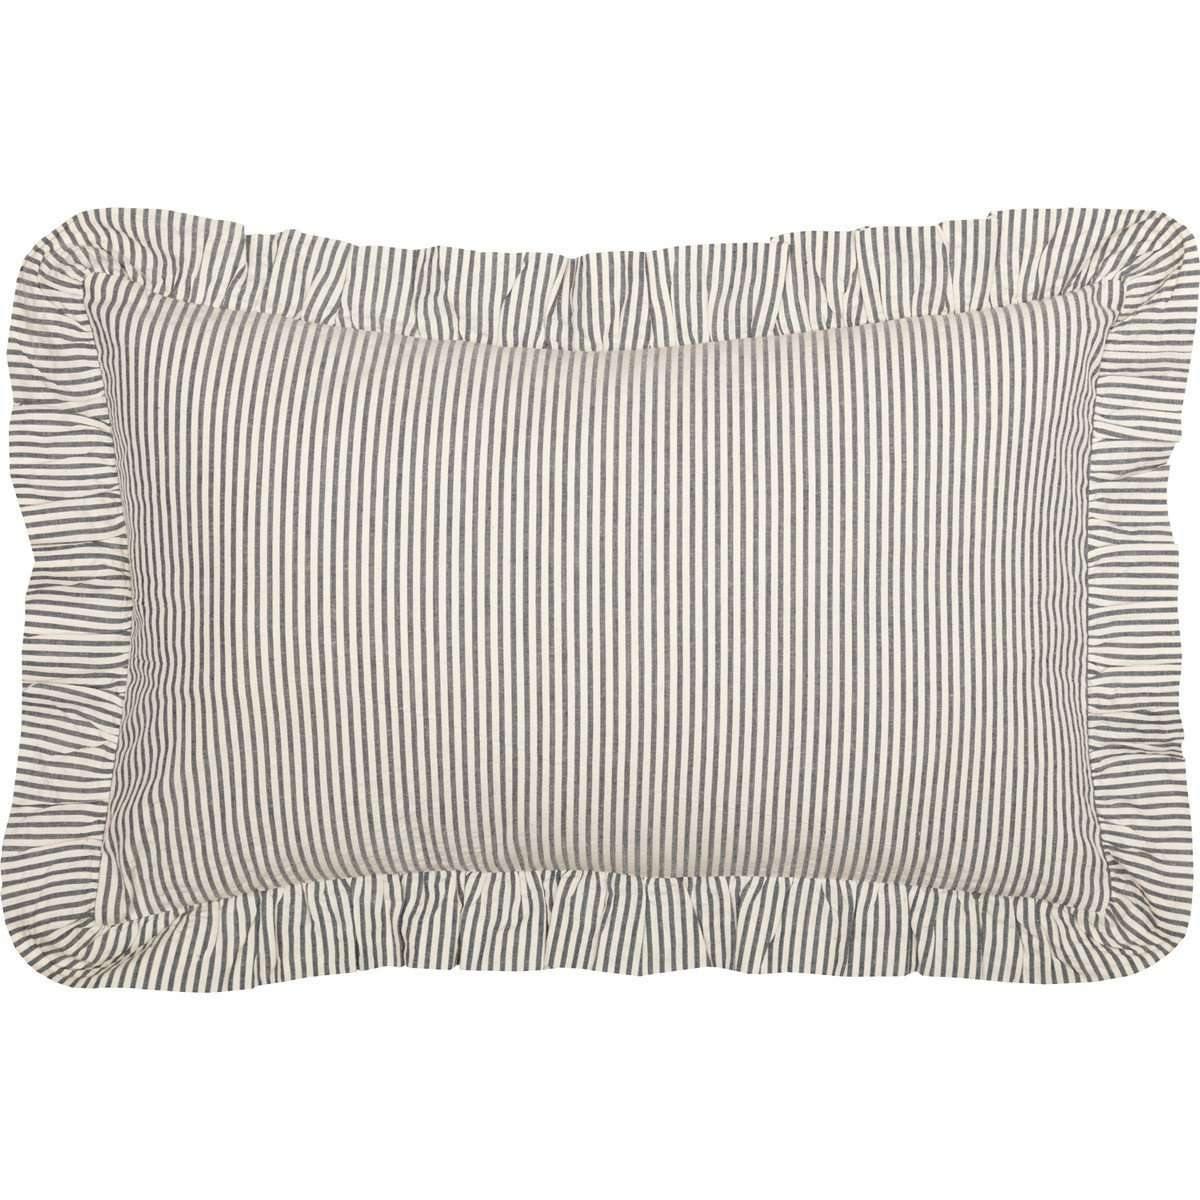 Hatteras Seersucker Blue Ticking Stripe Fabric Pillow 14x22 VHC Brands - The Fox Decor